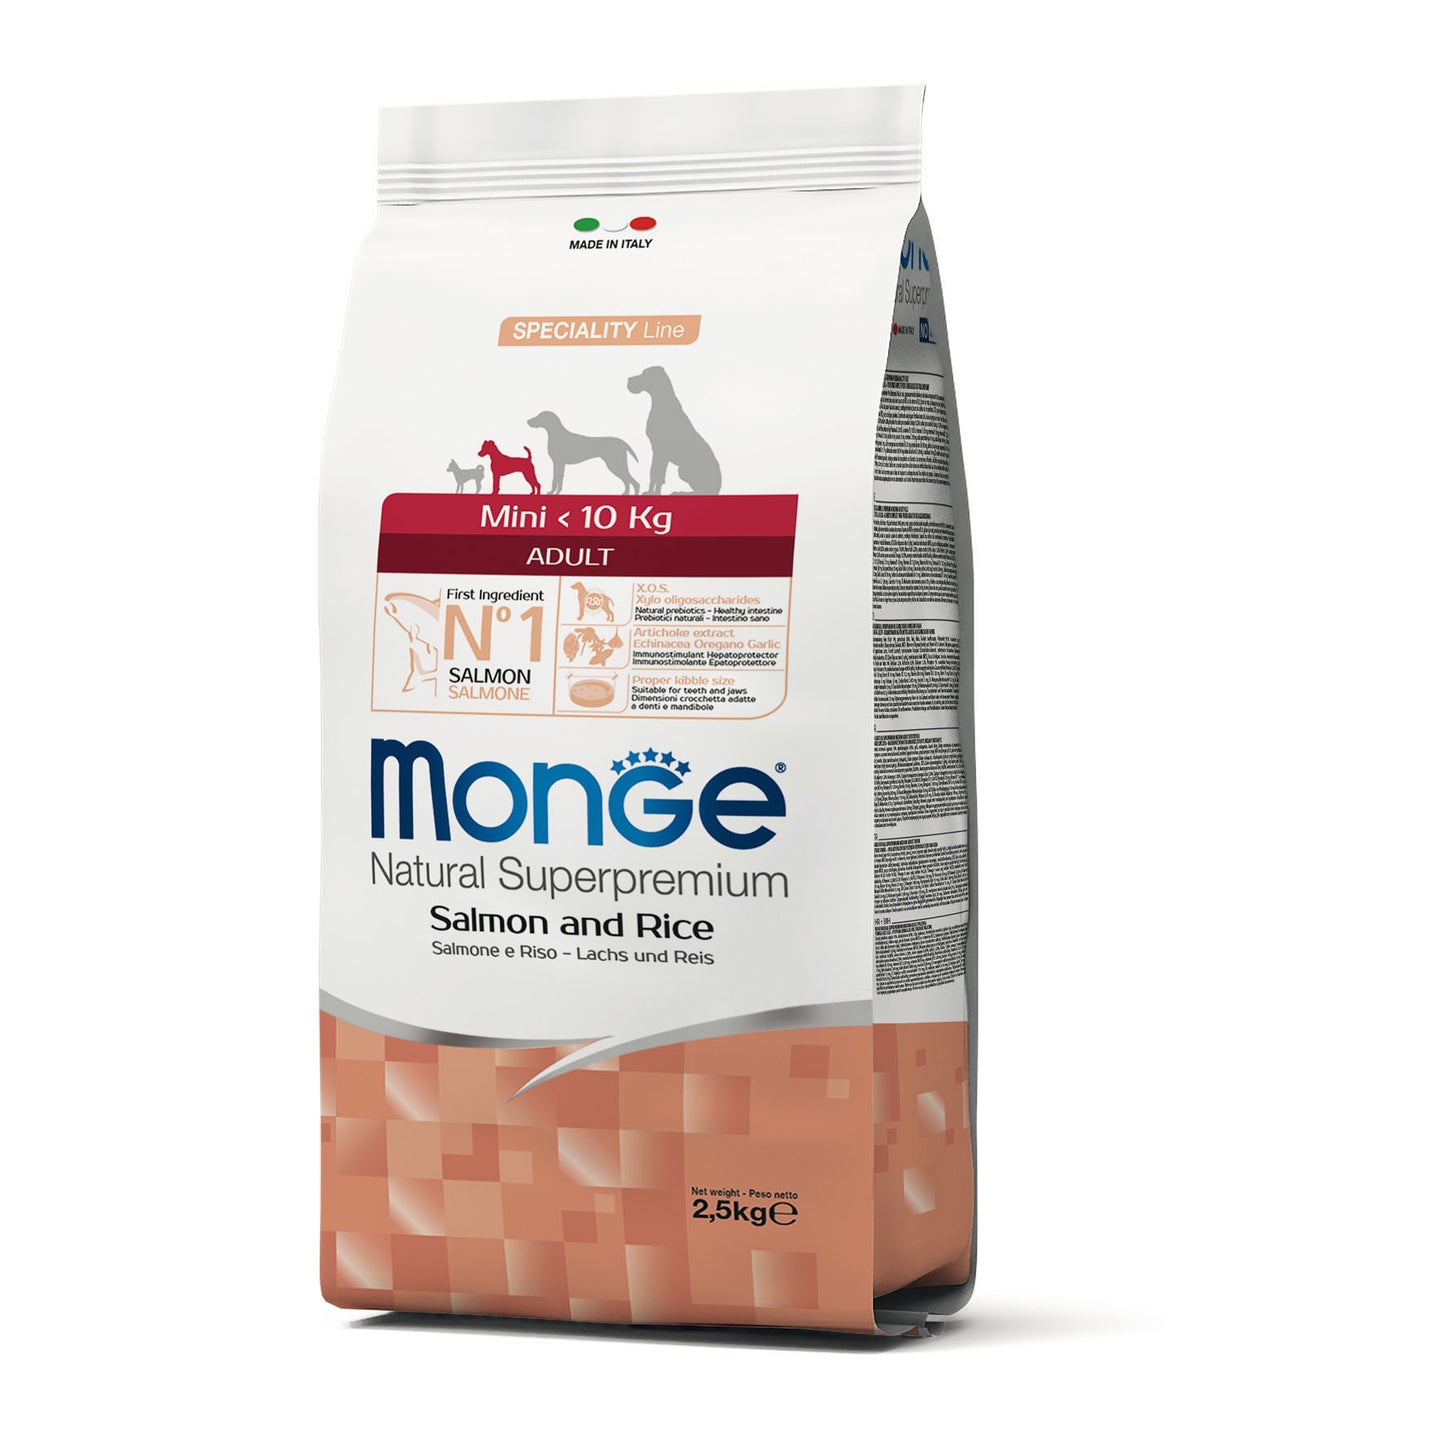 Monge Dog - SPECIALITY Line - Monoprotein - Adult Mini Salmon